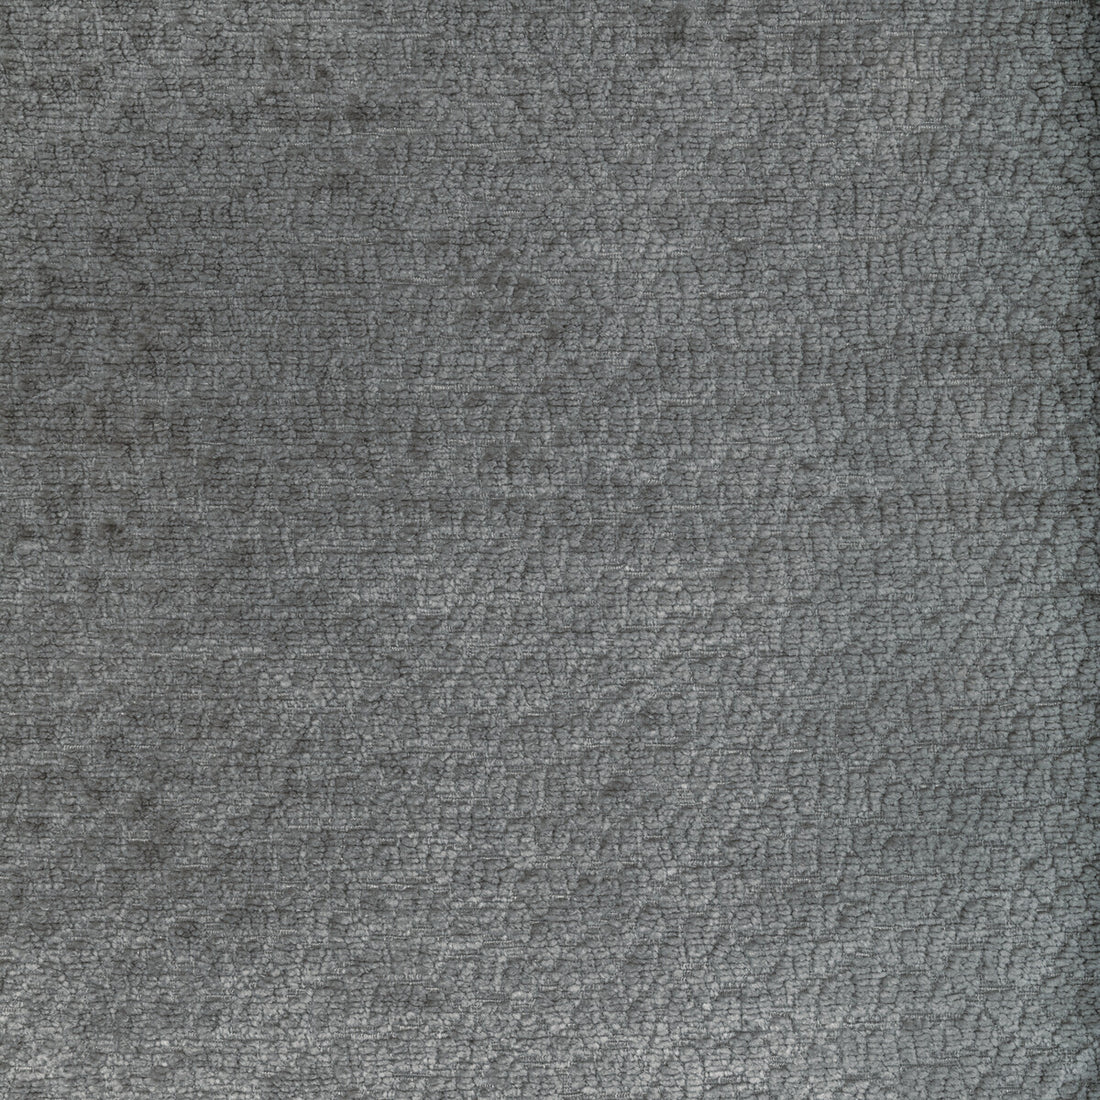 Kravet Smart fabric in 36606-21 color - pattern 36606.21.0 - by Kravet Smart in the Performance Kravetarmor collection